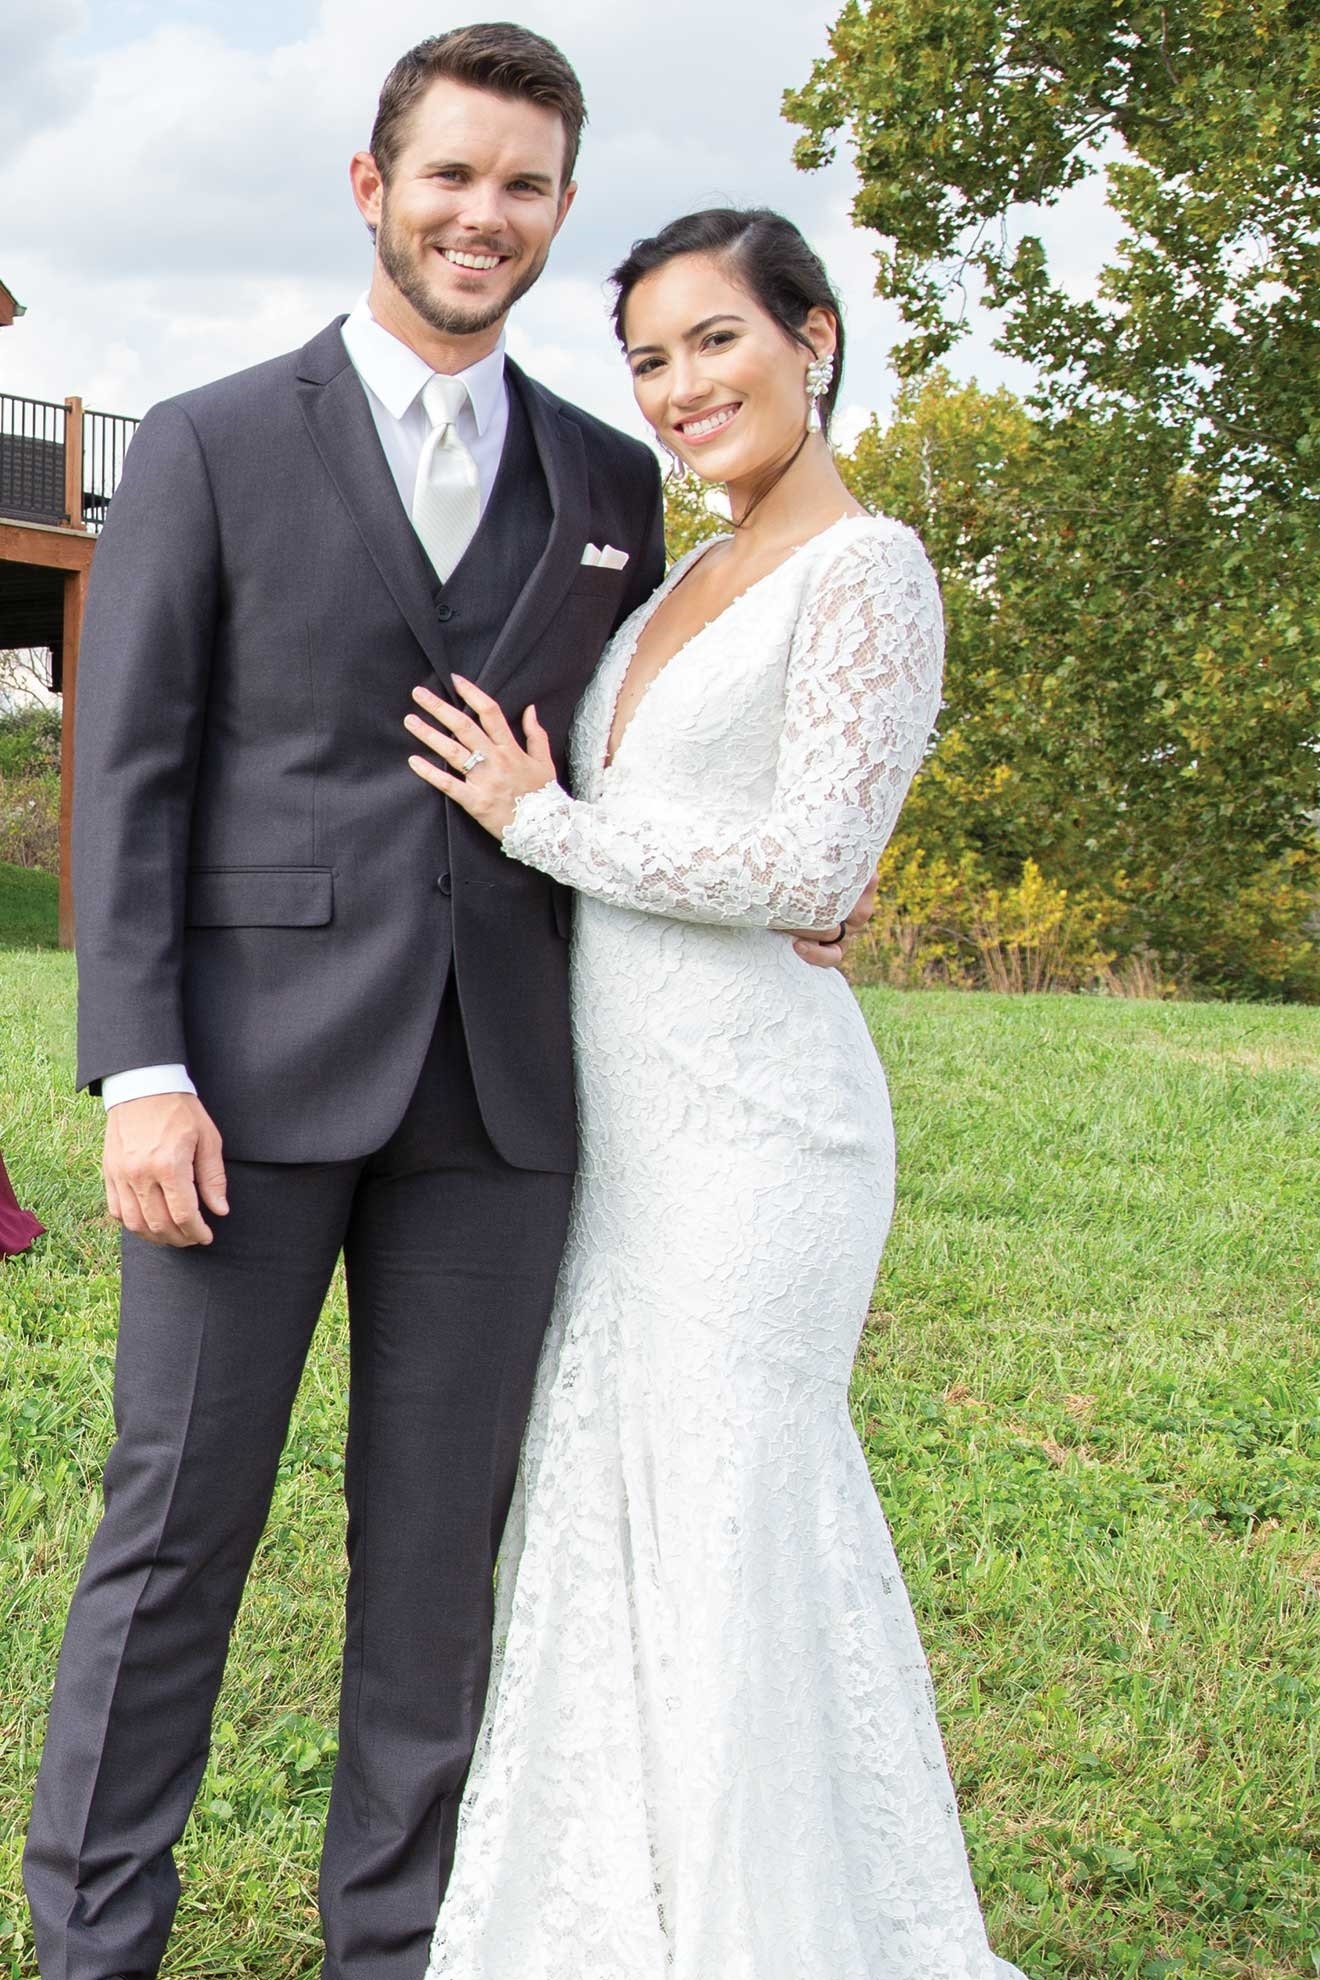 grey suit wedding